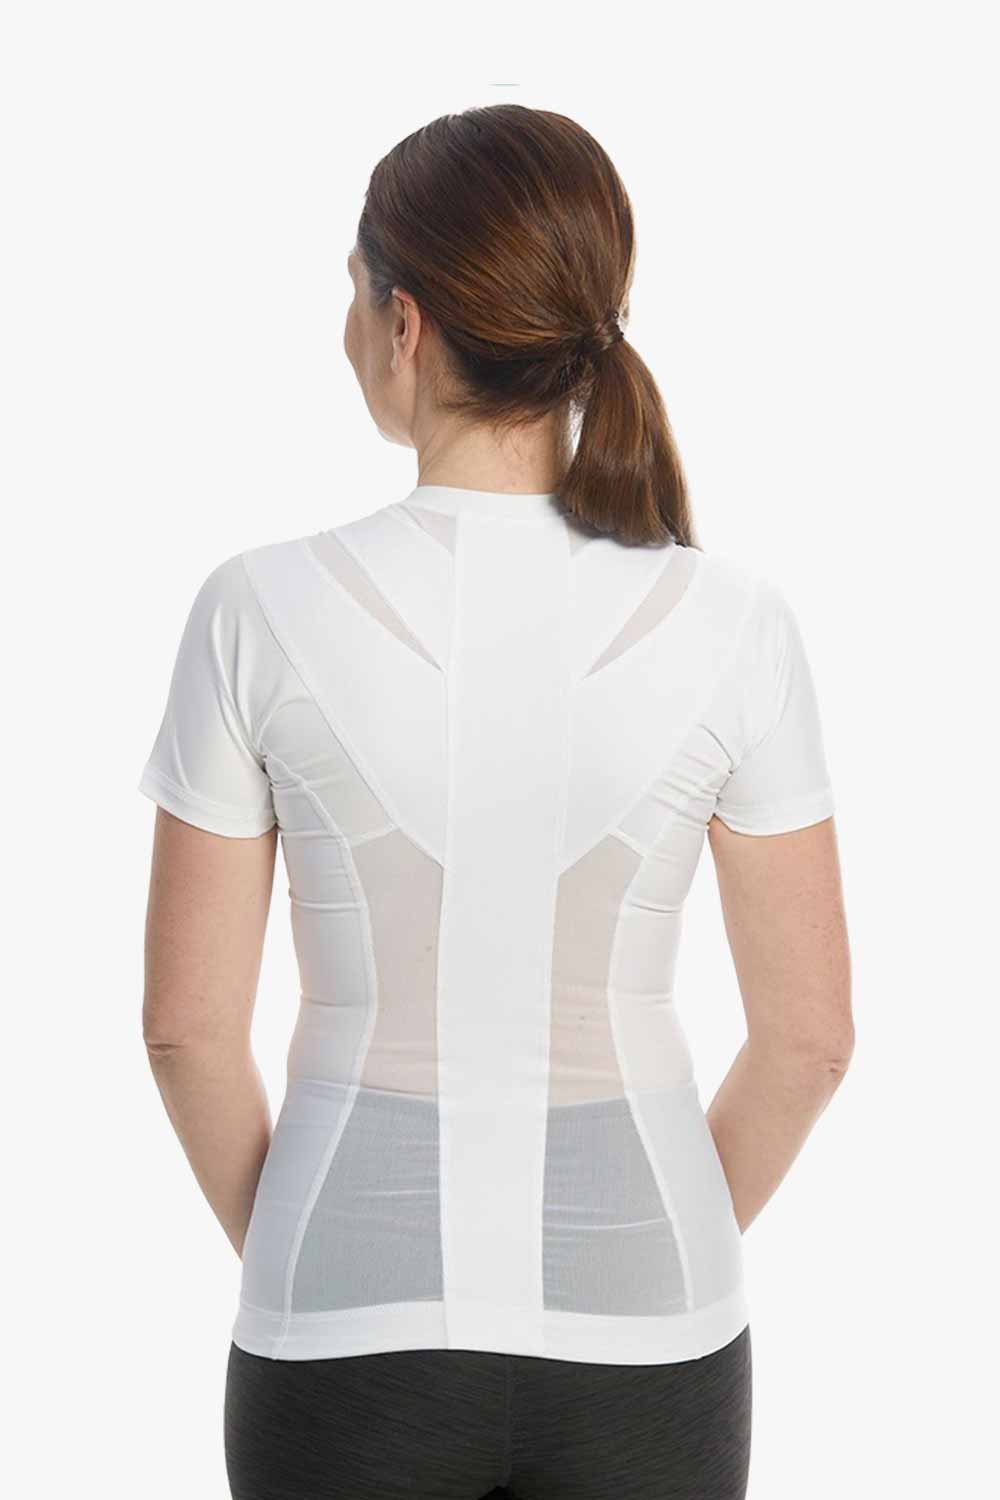  RELAXSAN Posture 6070-RP (Black XS) T shirt, Back